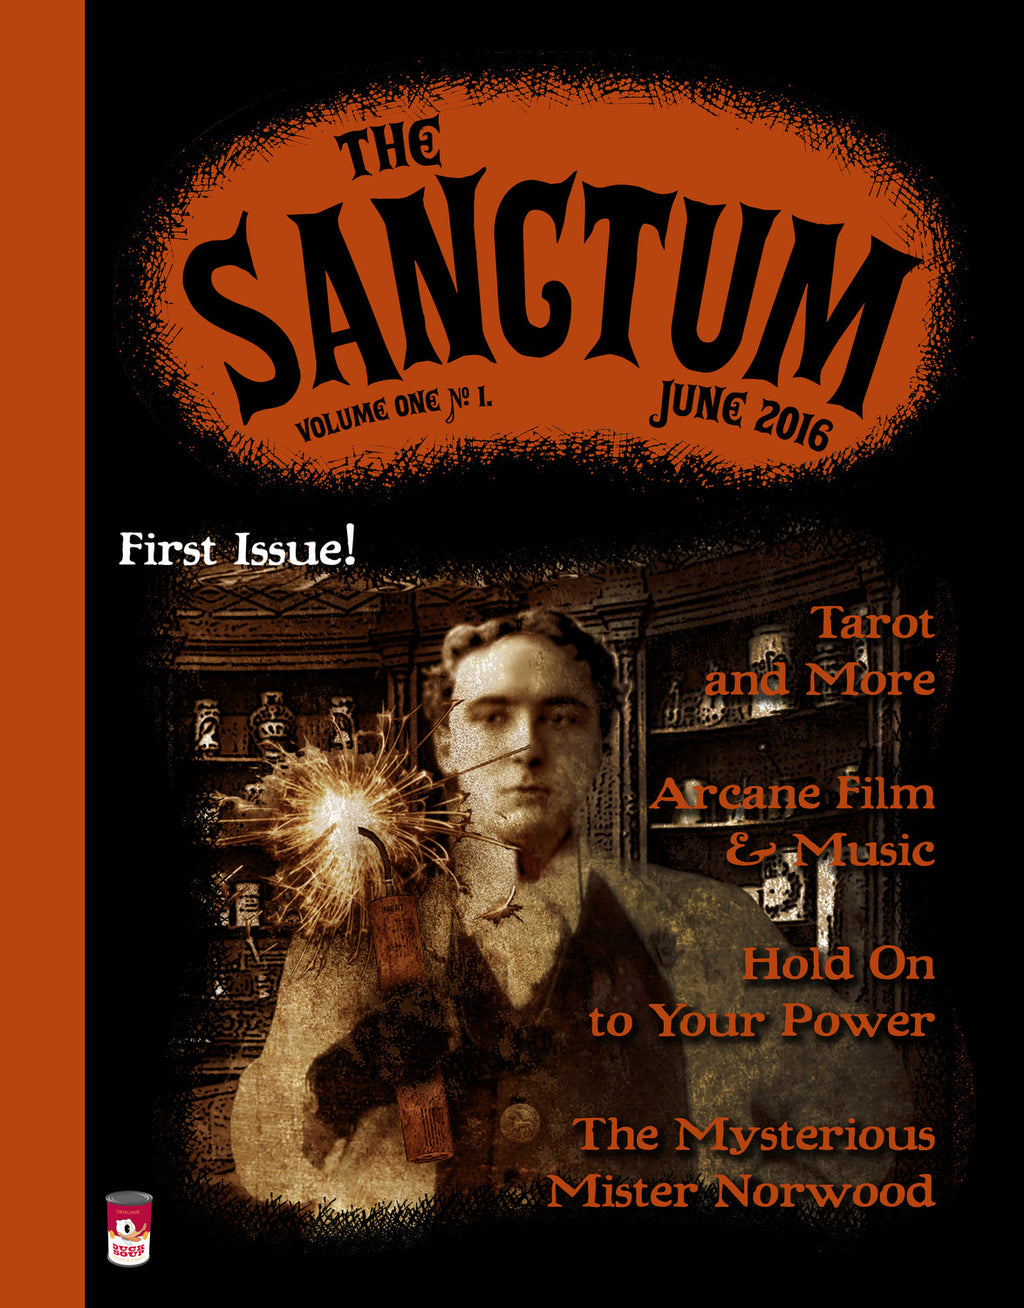 THE SANCTUM, Vol. 1, #1: PDF Edition